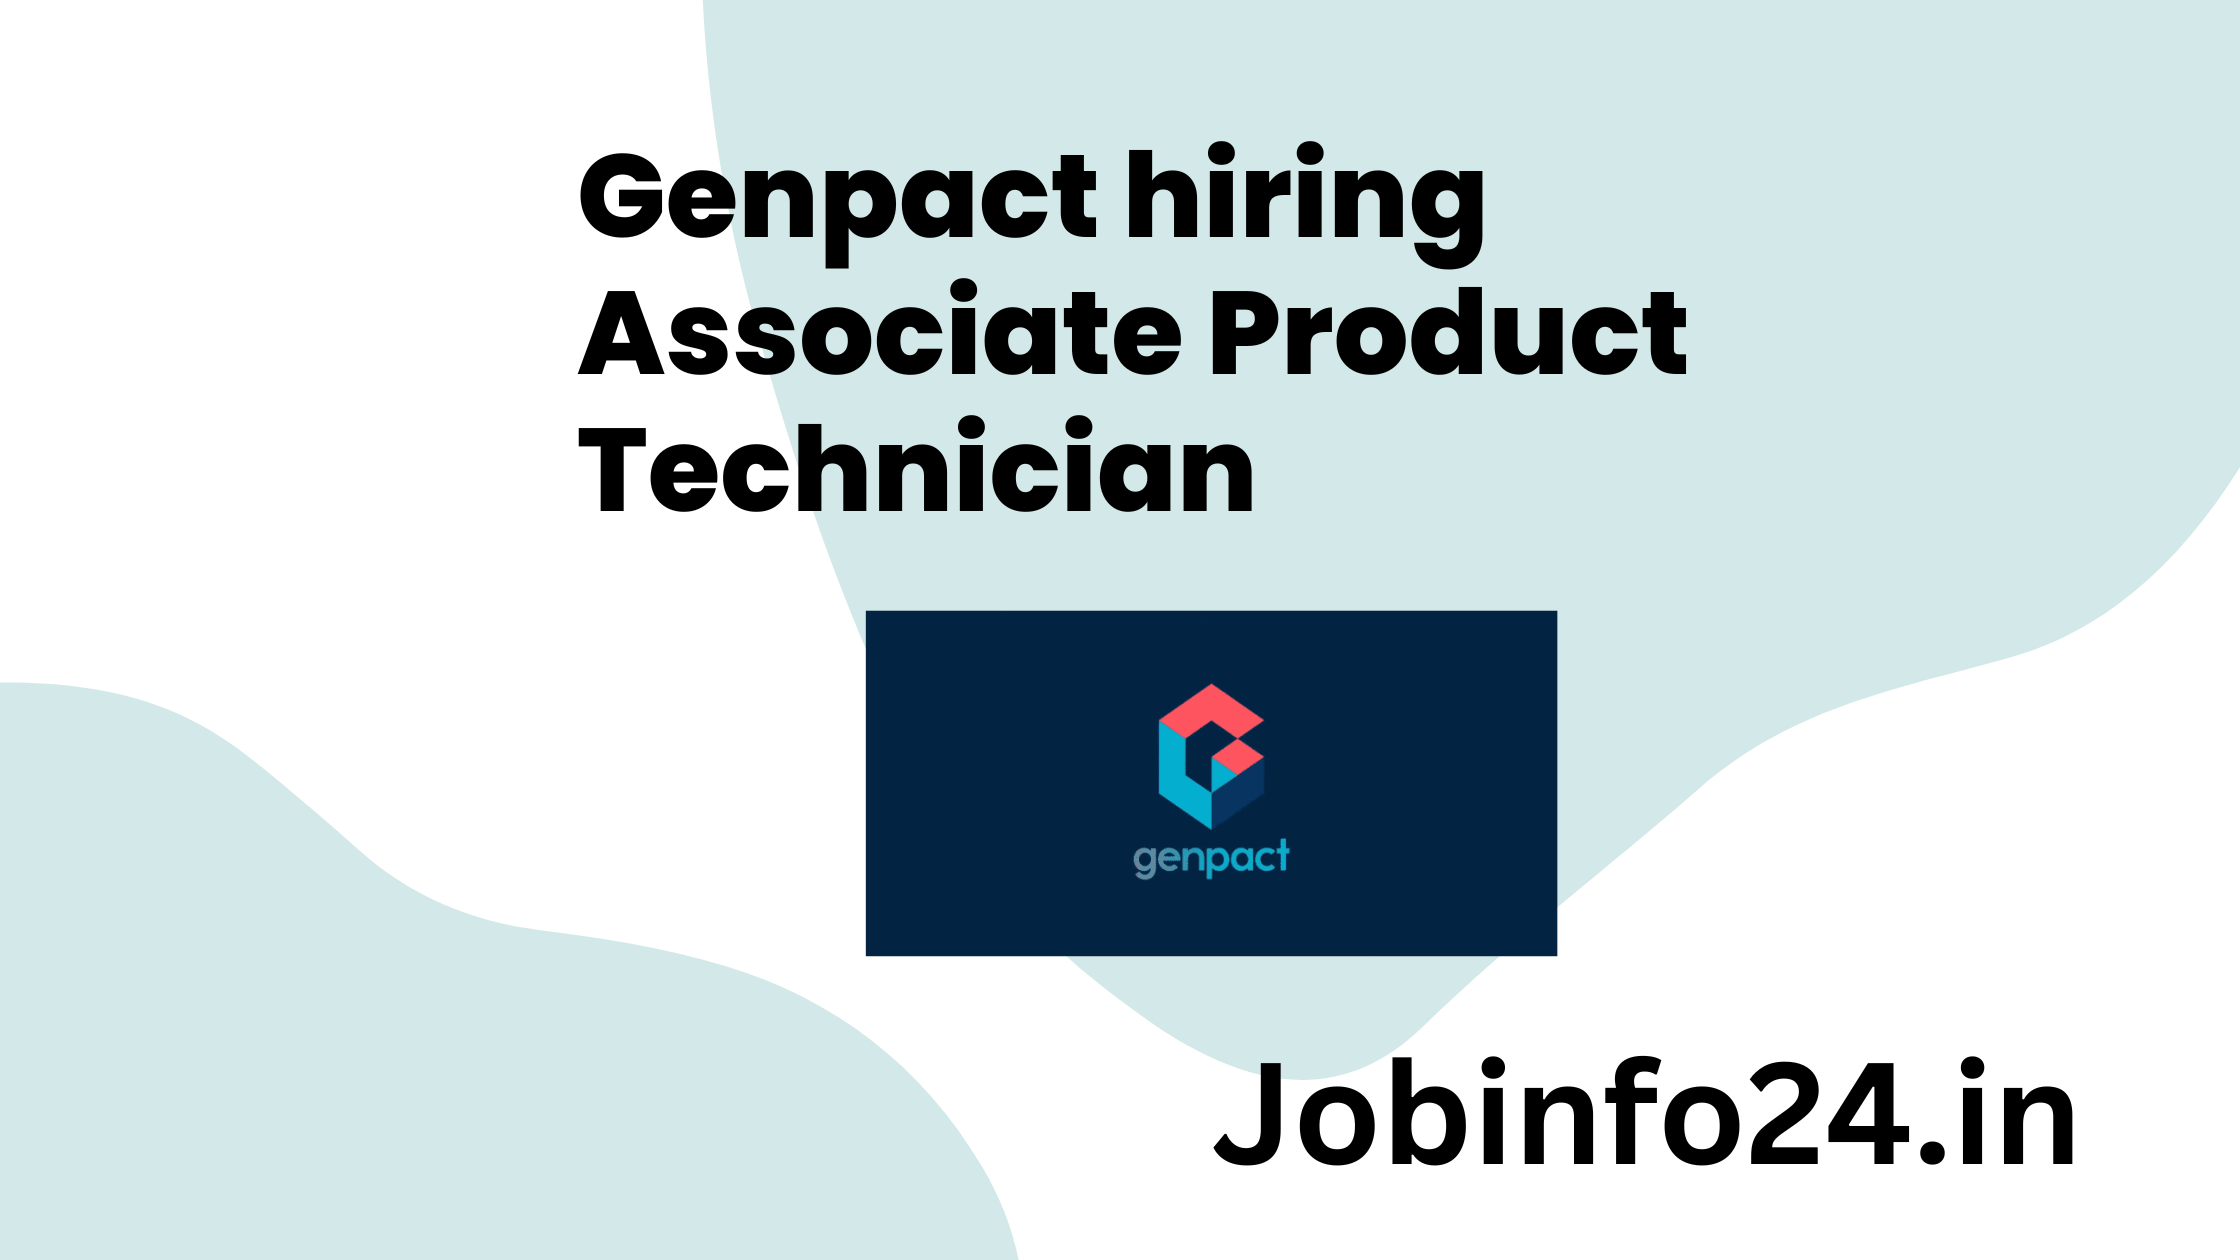 Genpact hiring Associate Product Technician